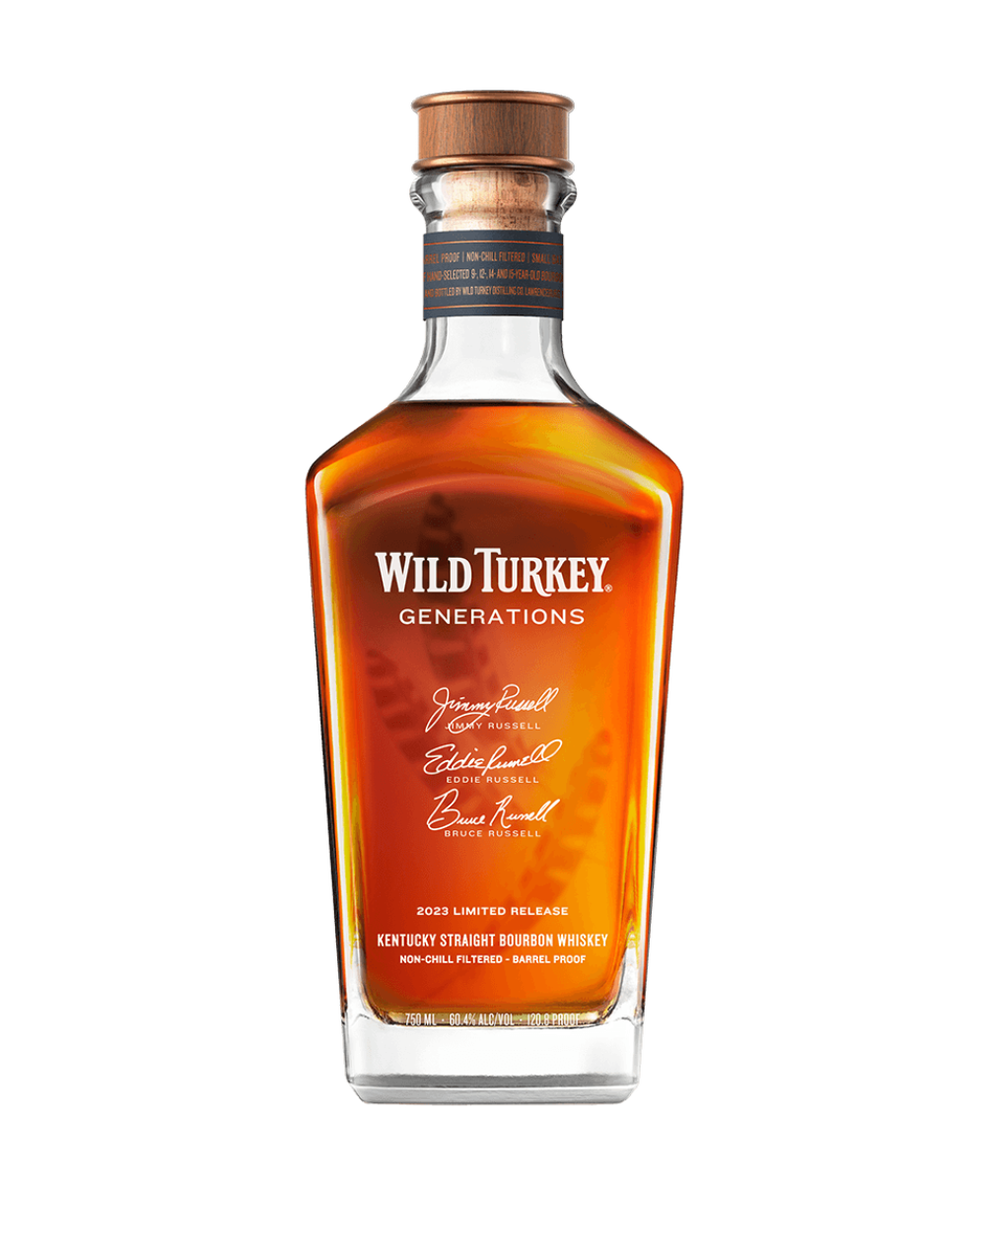 Wild Turkey Generations Kentucky Straight Bourbon Whiskey 2023